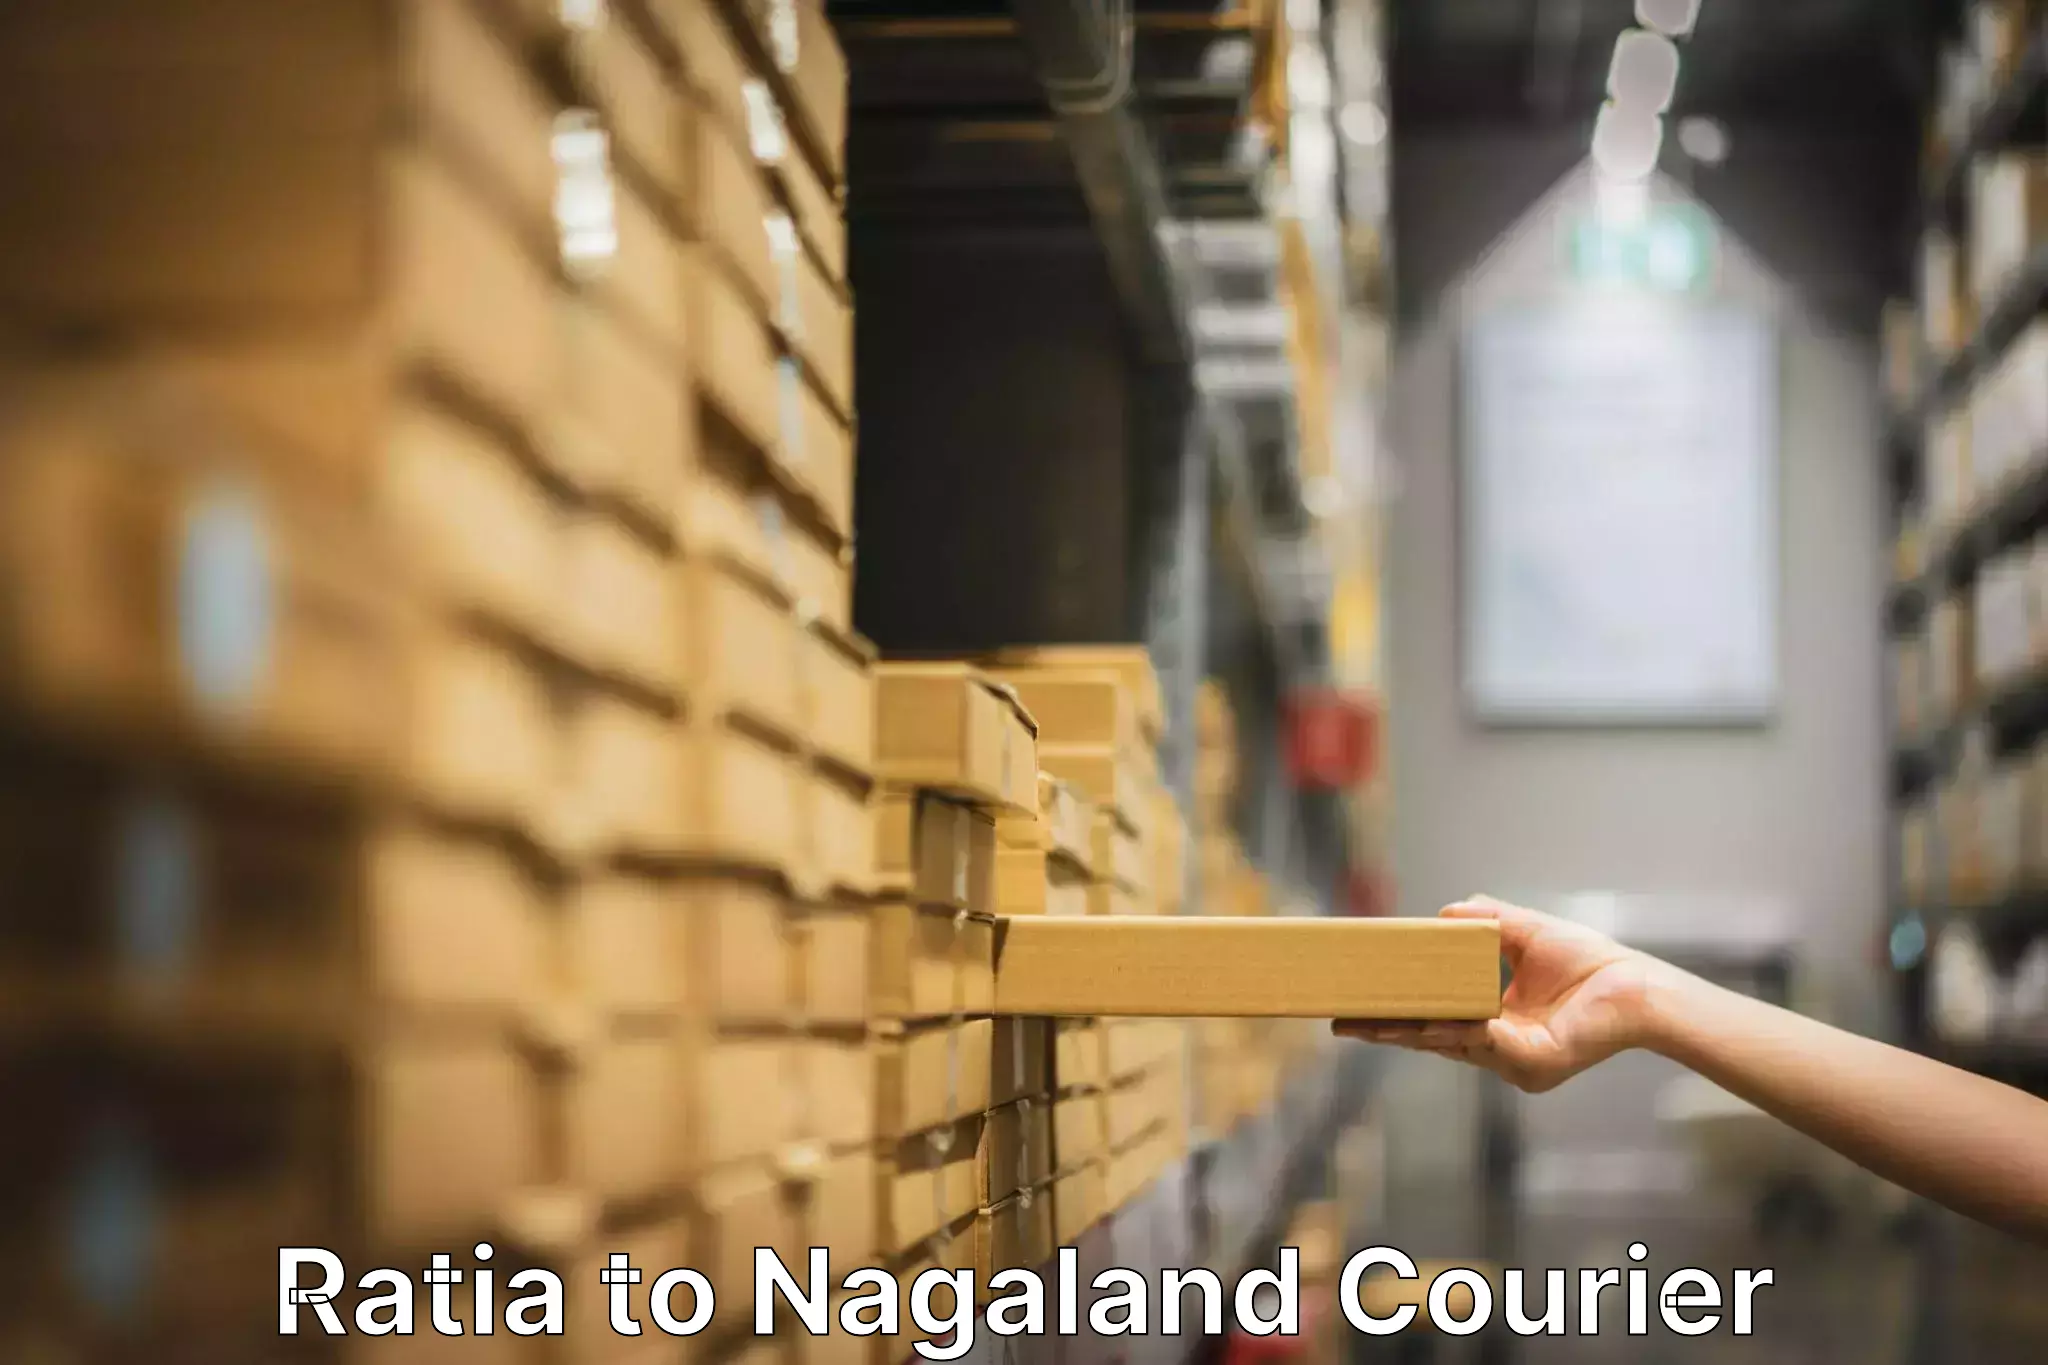 Furniture moving experts Ratia to Nagaland